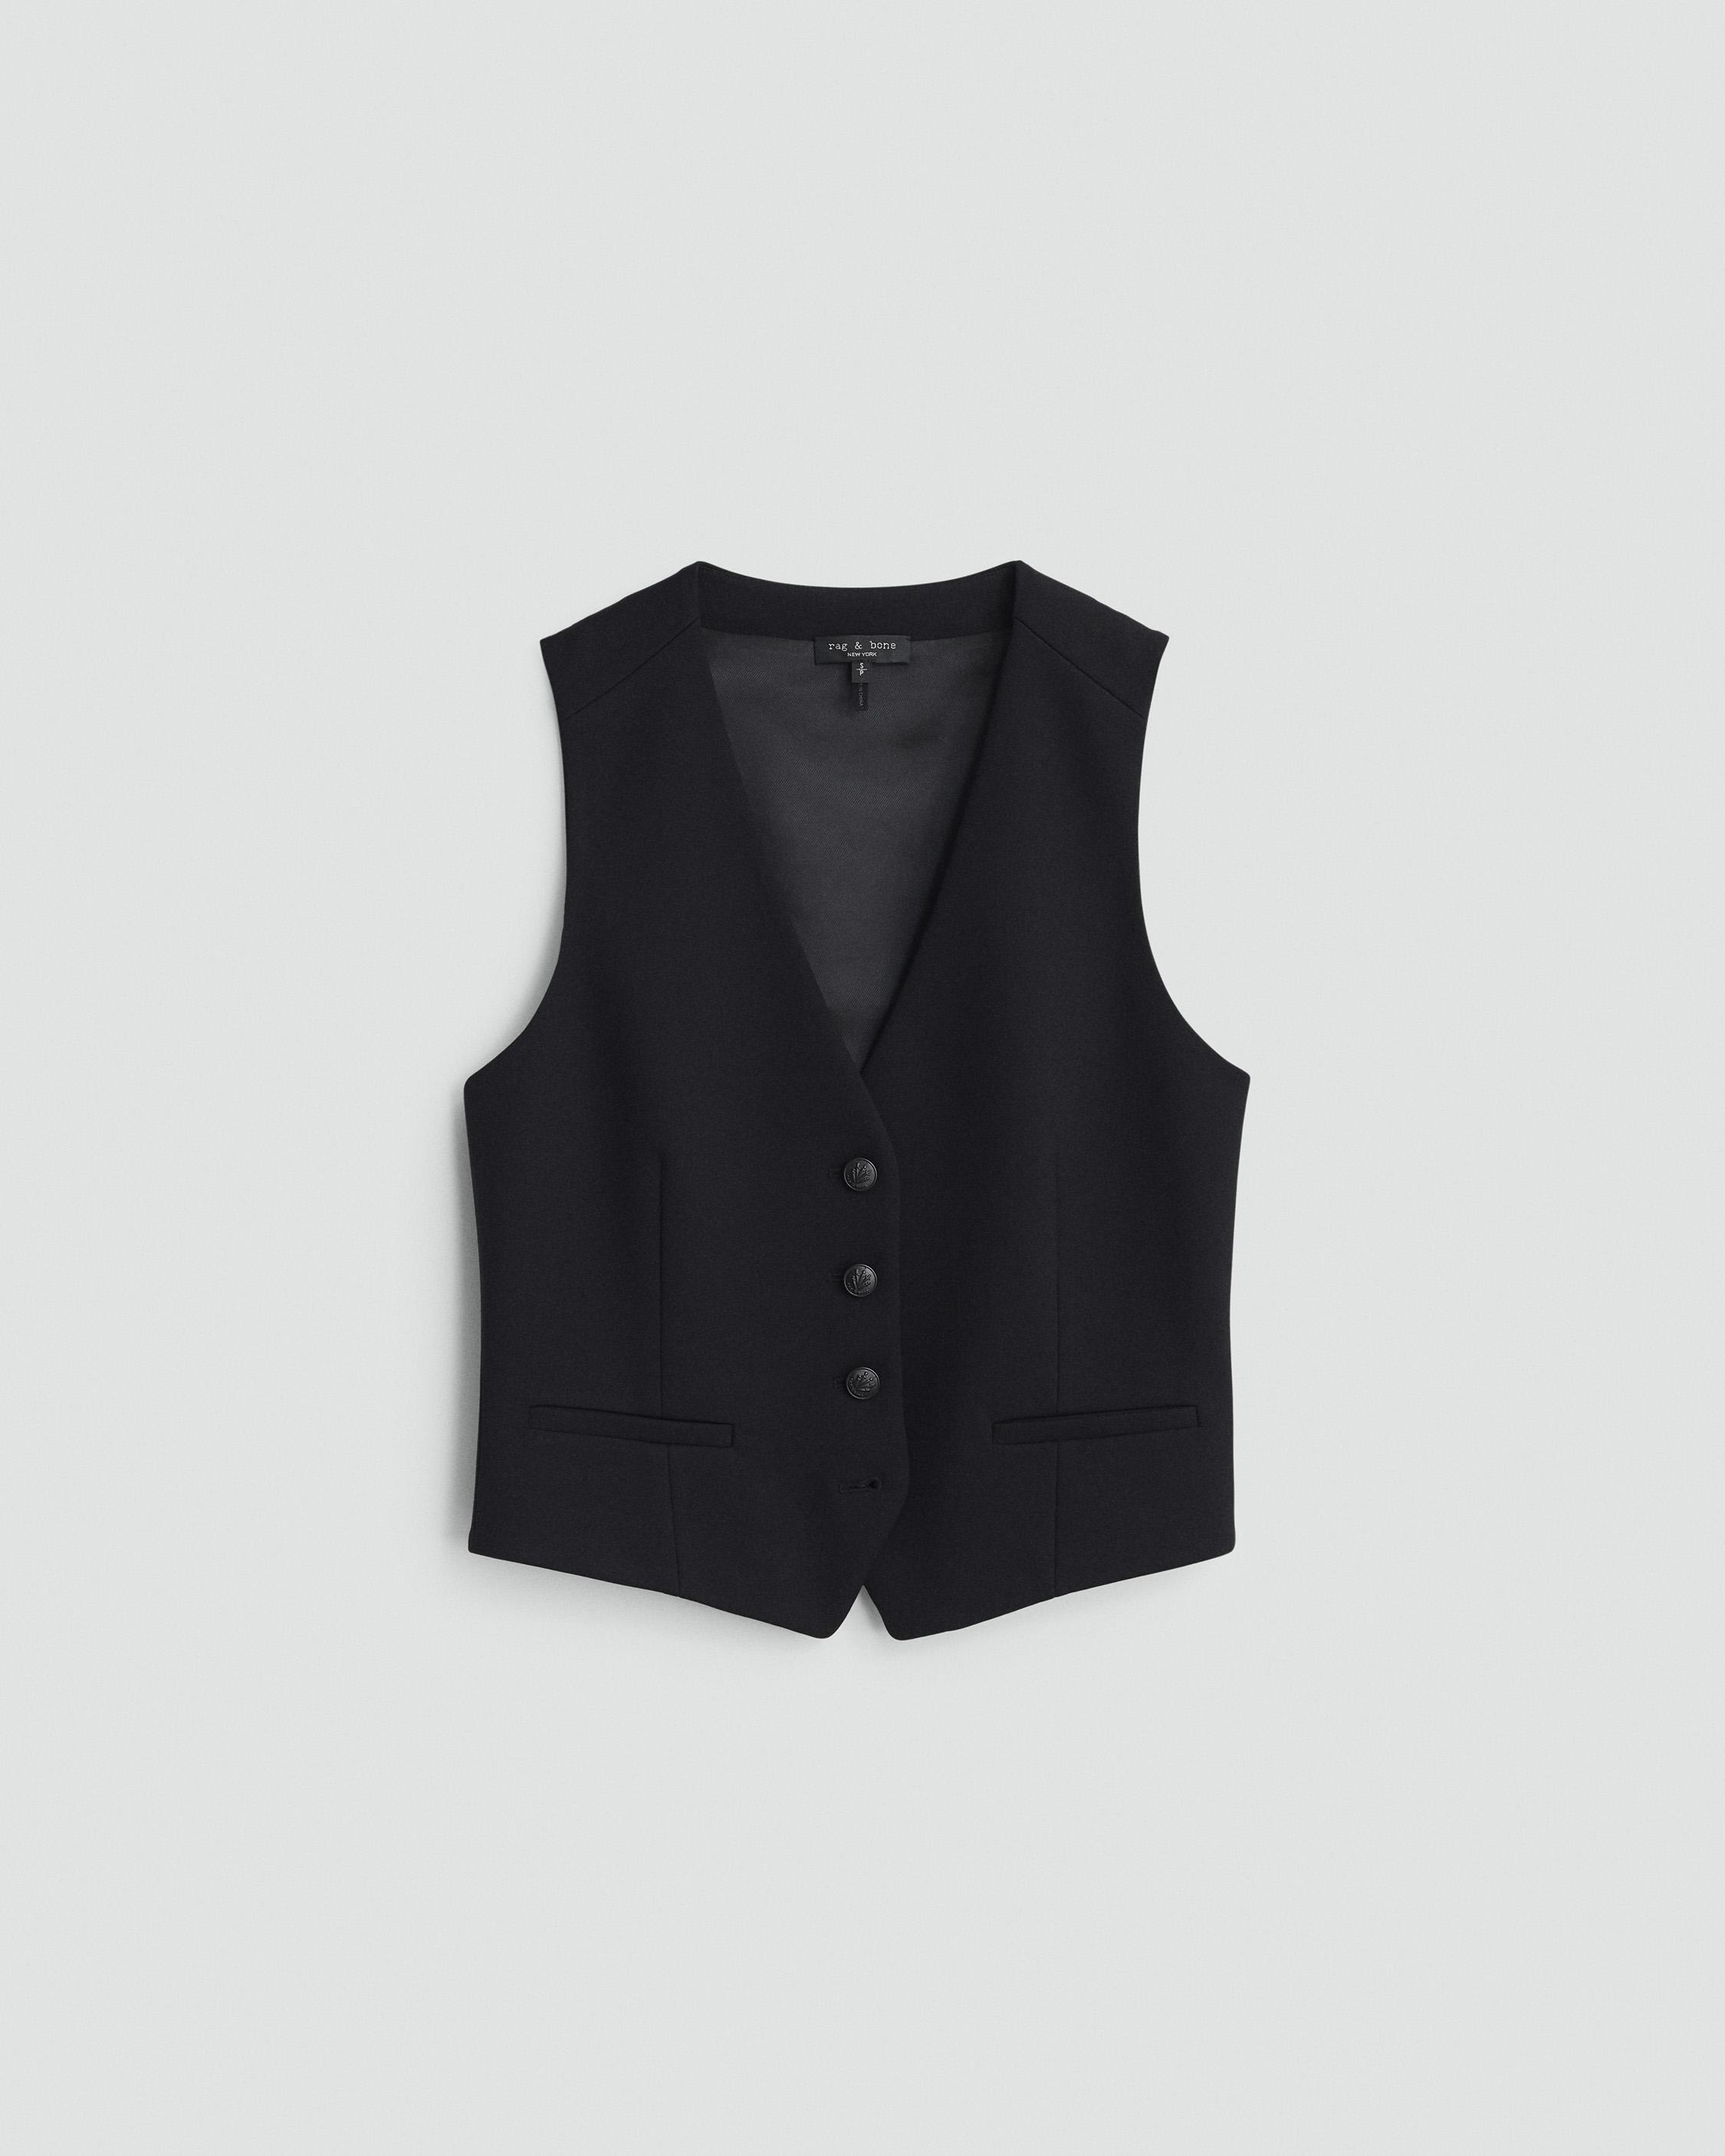 Women's Blazers & Vests in Sleek, Modern Styles | rag & bone